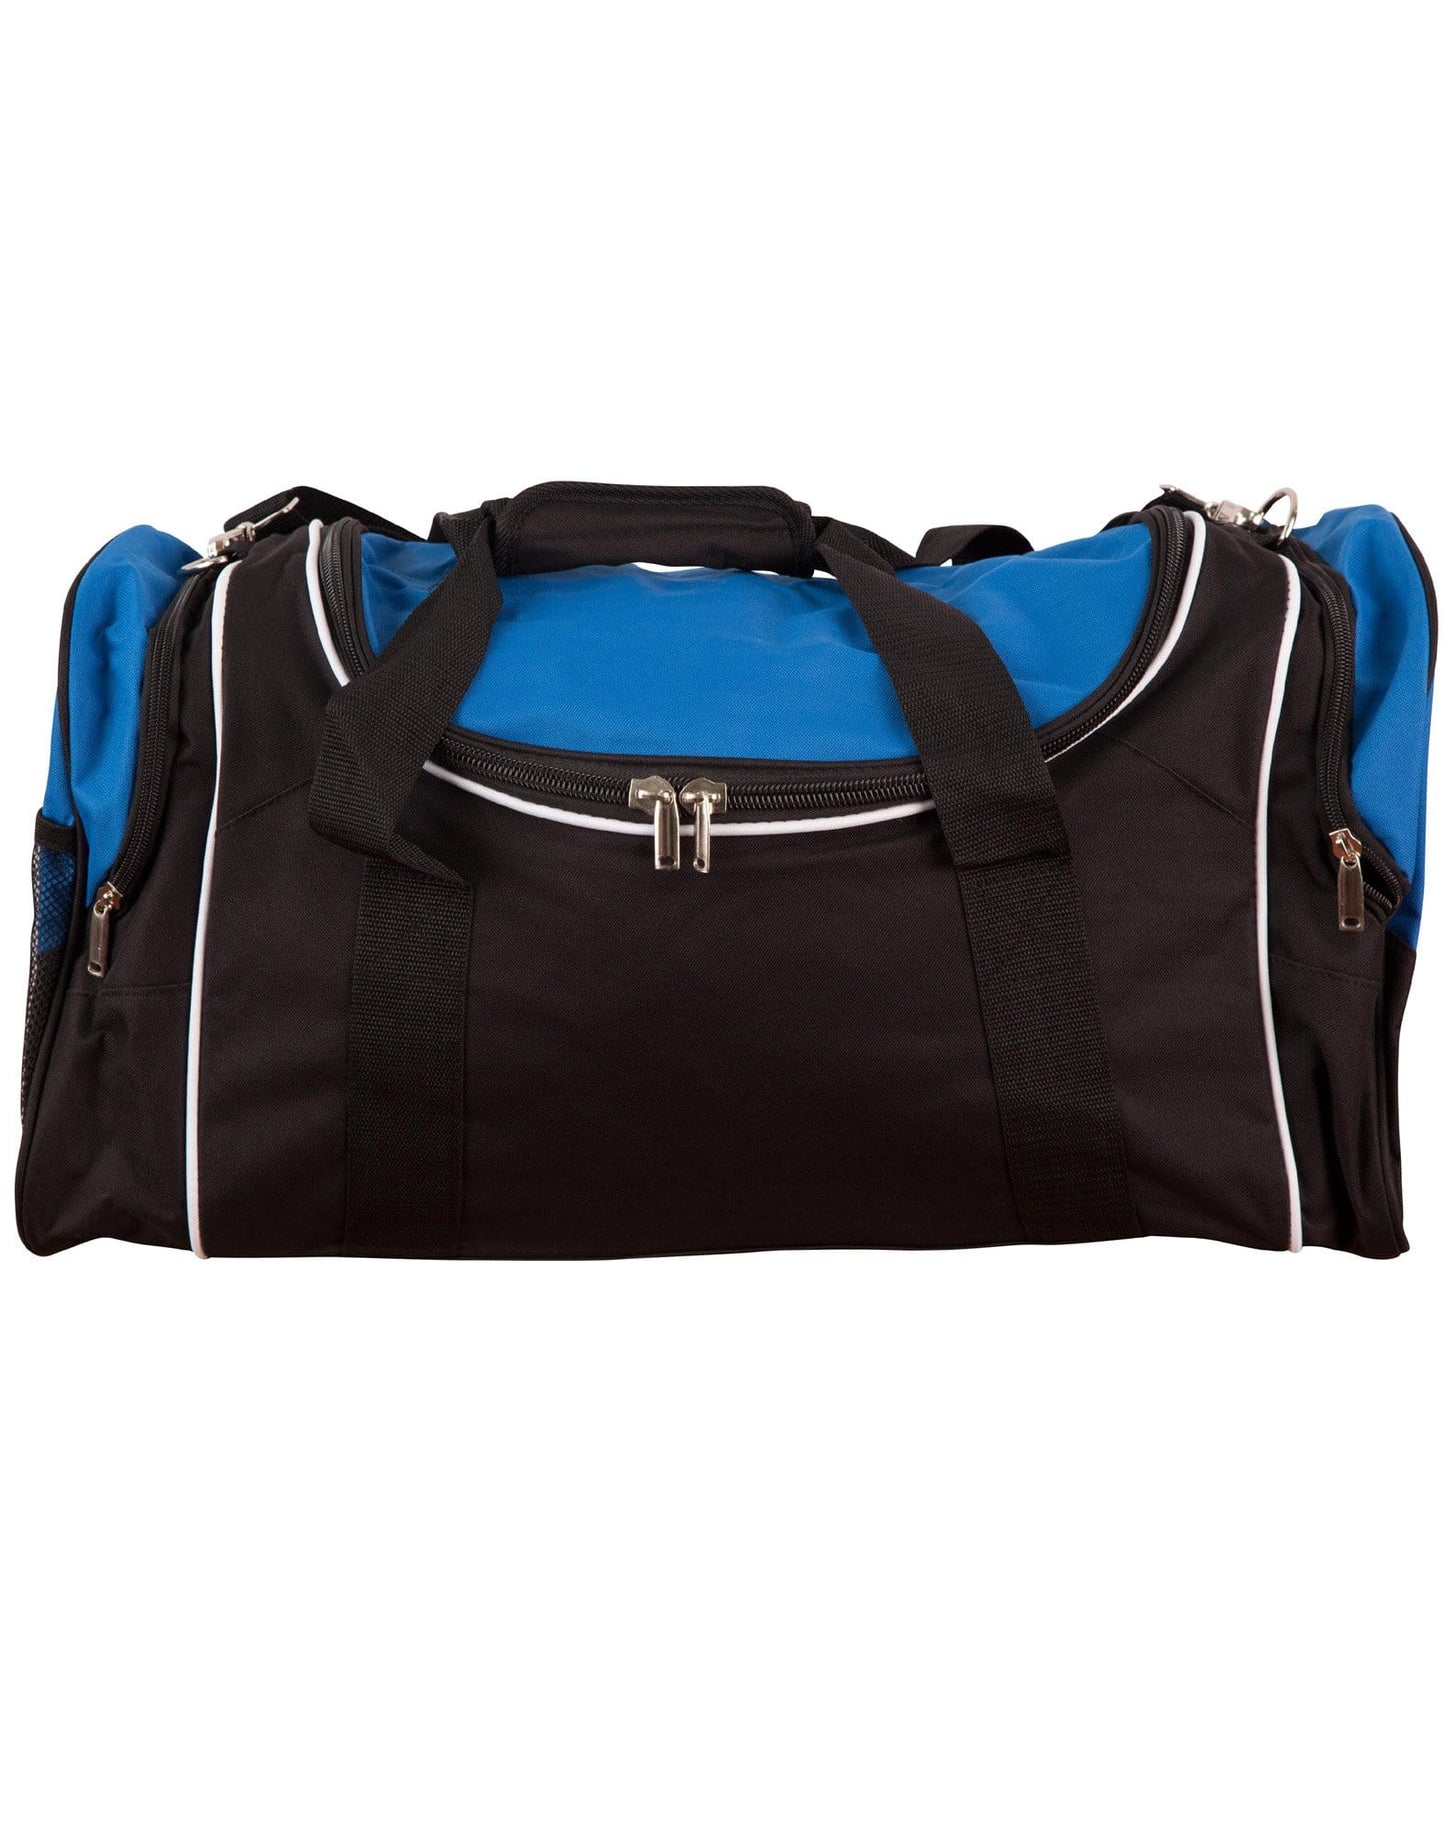 Winner Sports/ Travel Bag B2020 Active Wear Winning Spirit Black/White/Royal "(w)65cm x (h)32cm x (d)27cm, 56.2 Litres Capacity" 